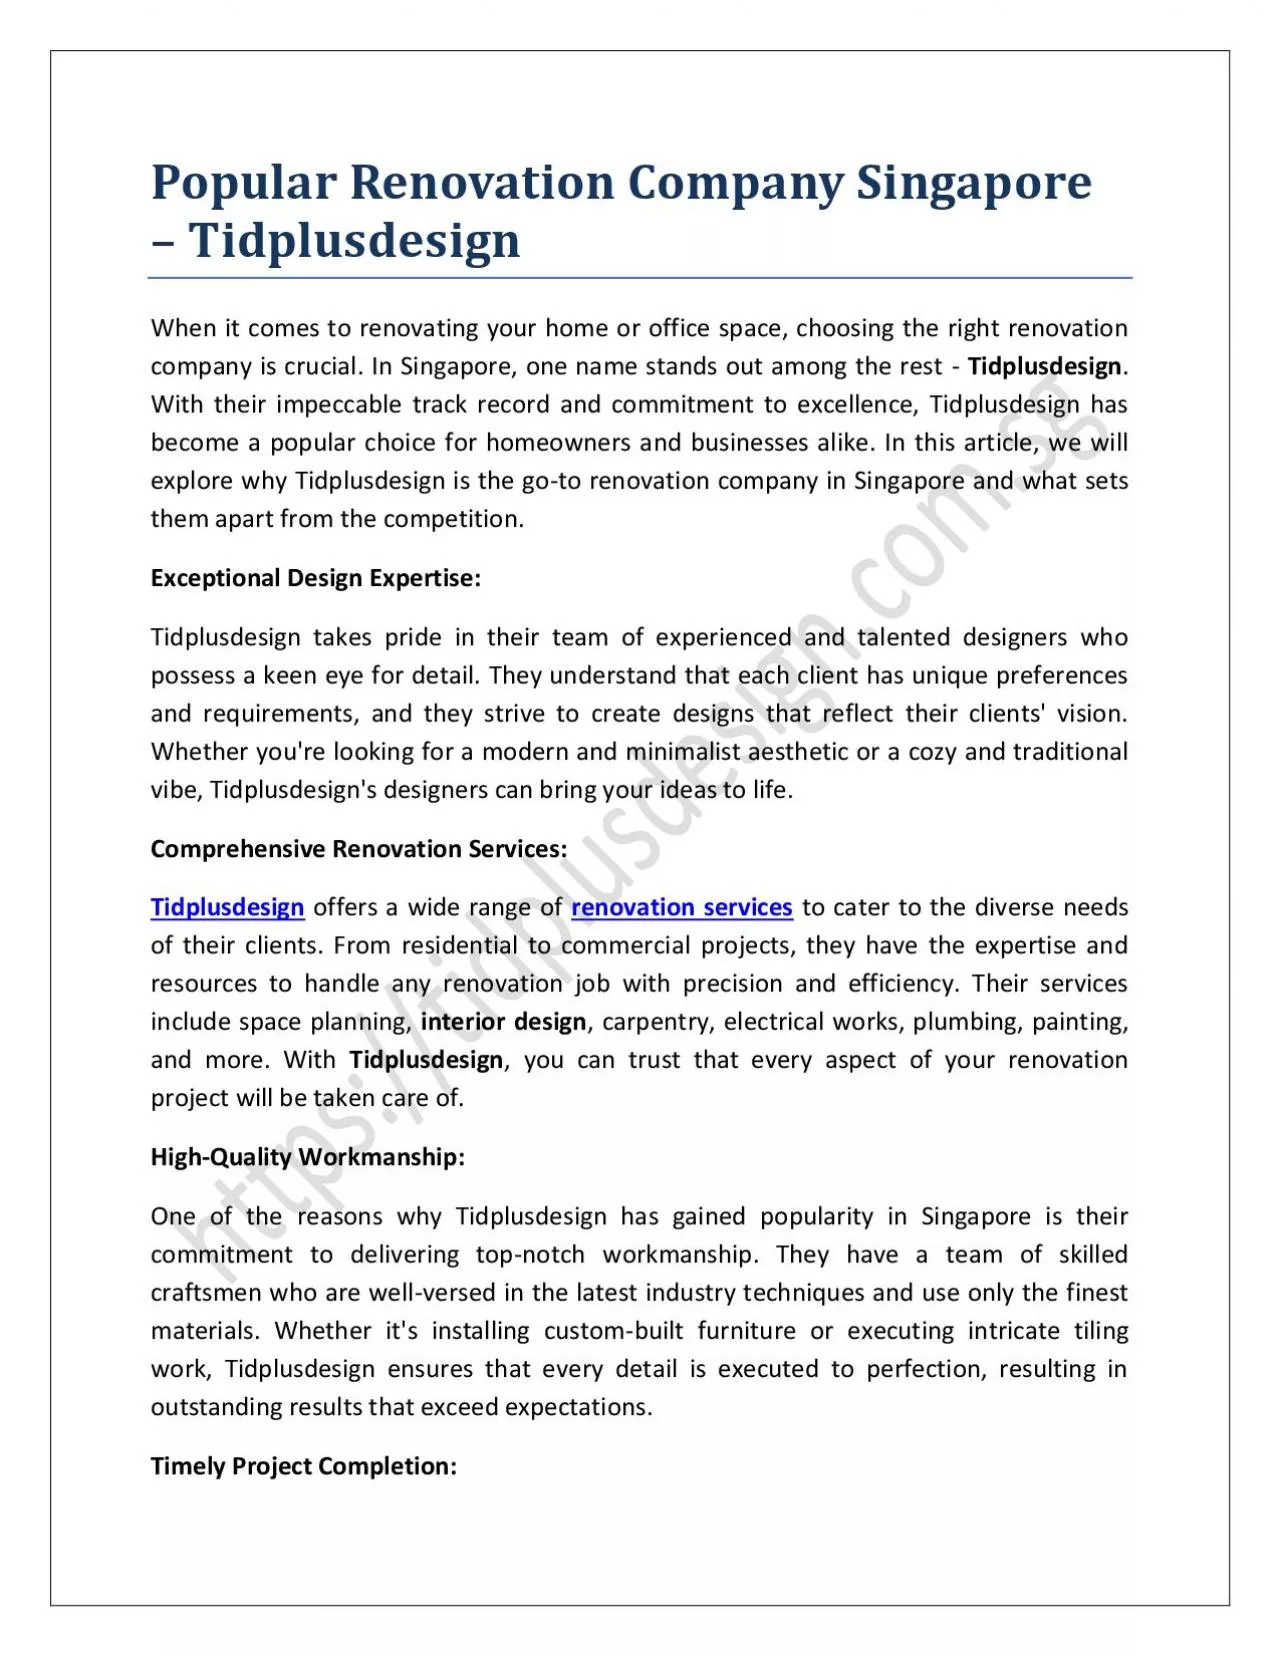 Popular Renovation Company Singapore – Tidplusdesign